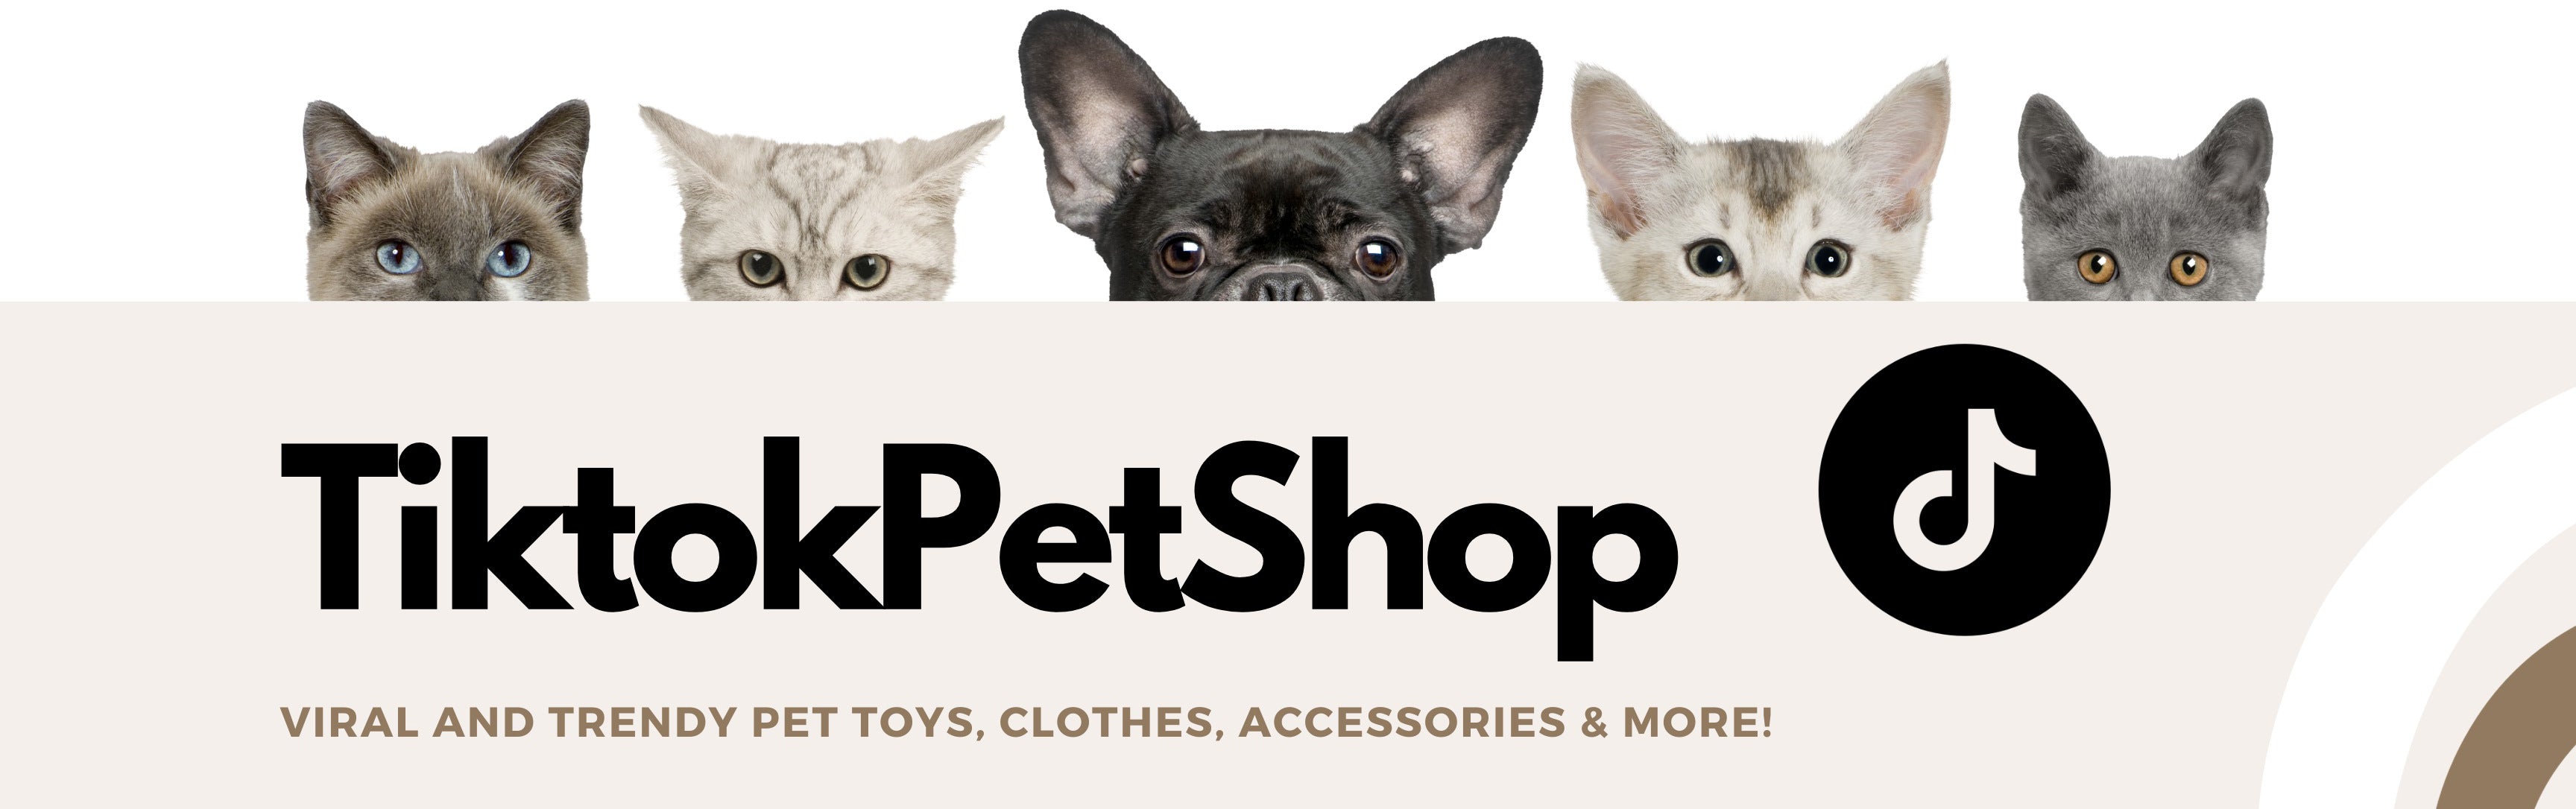 Tiktokpetshop.com Viral and trendy Pet products